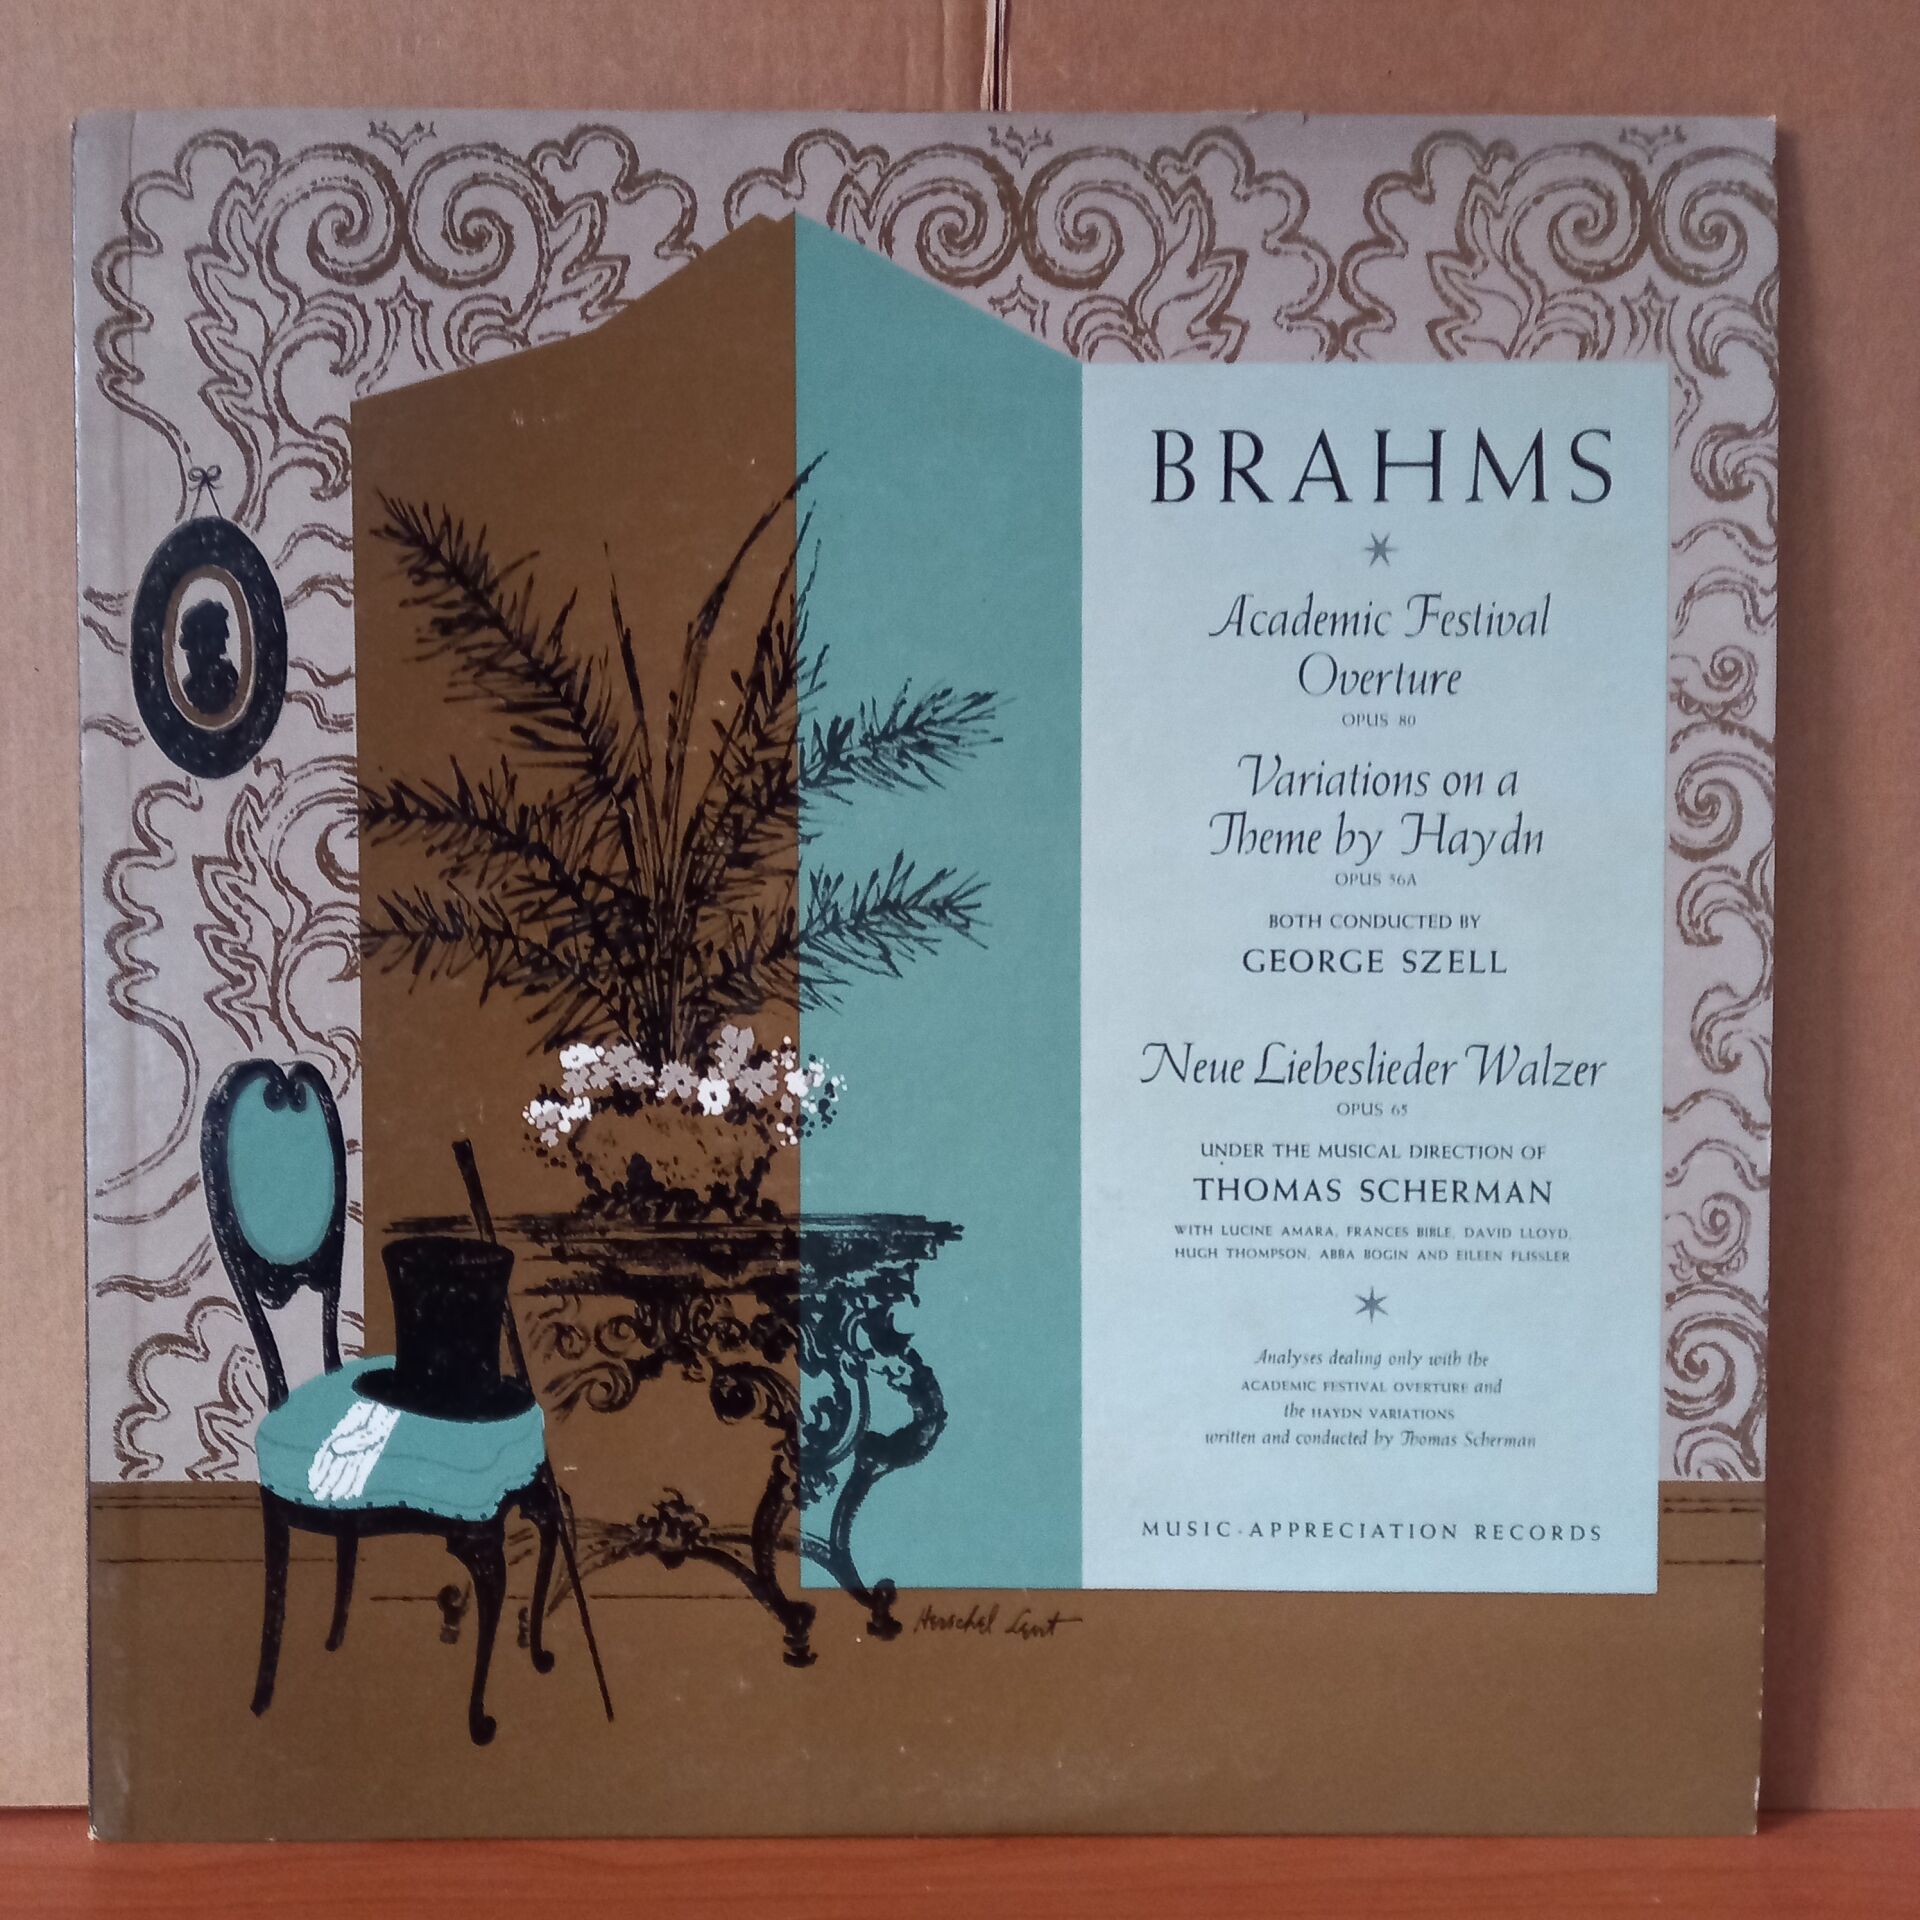 BRAHMS: ACADEMIC FESTIVAL OVERTURE, VARIATIONS ON A THEME BY HAYDN / GEORGE SZELL, THOMAS SCHERMAN (1957) - LP + 10 INCH 2.EL PLAK